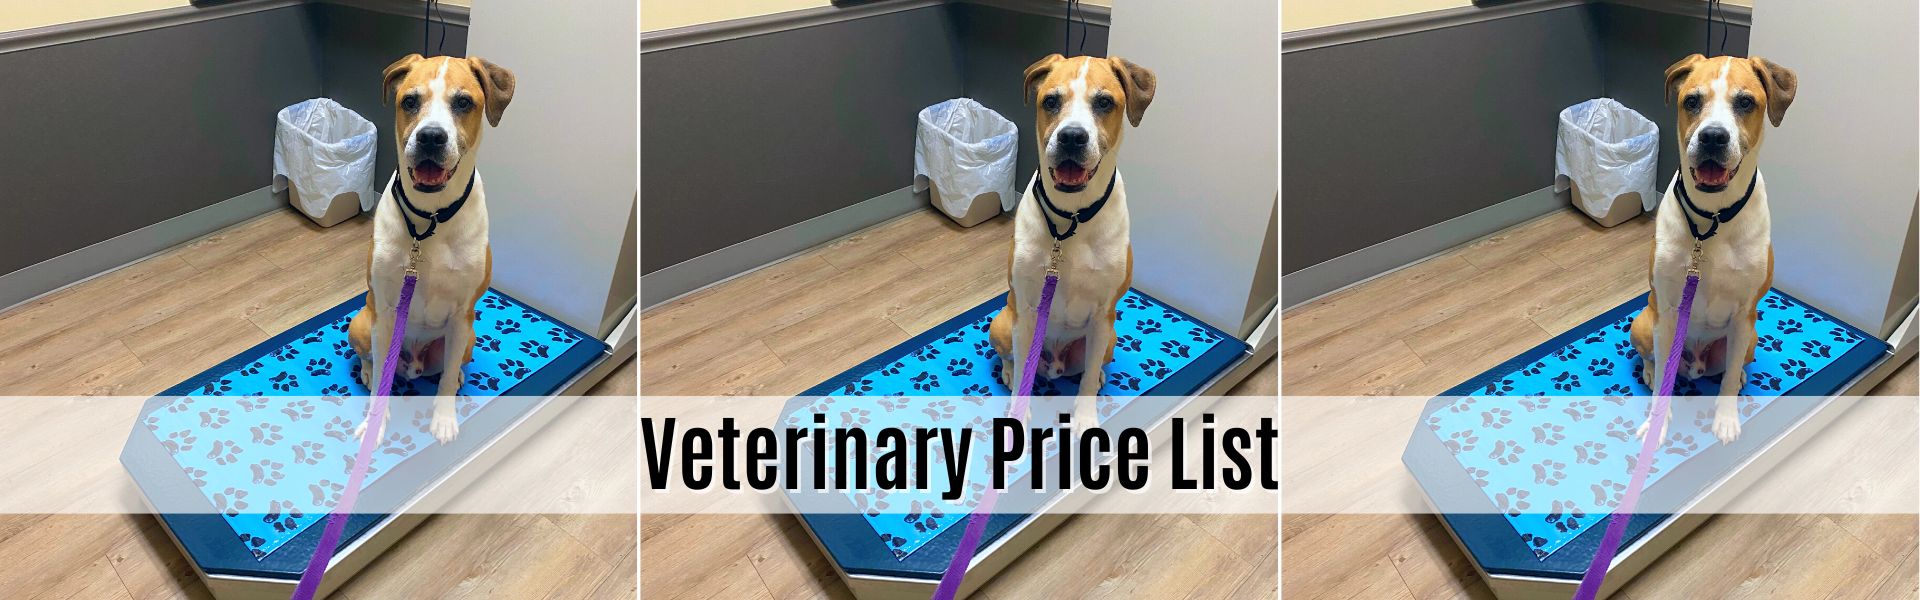 veterinary price list 